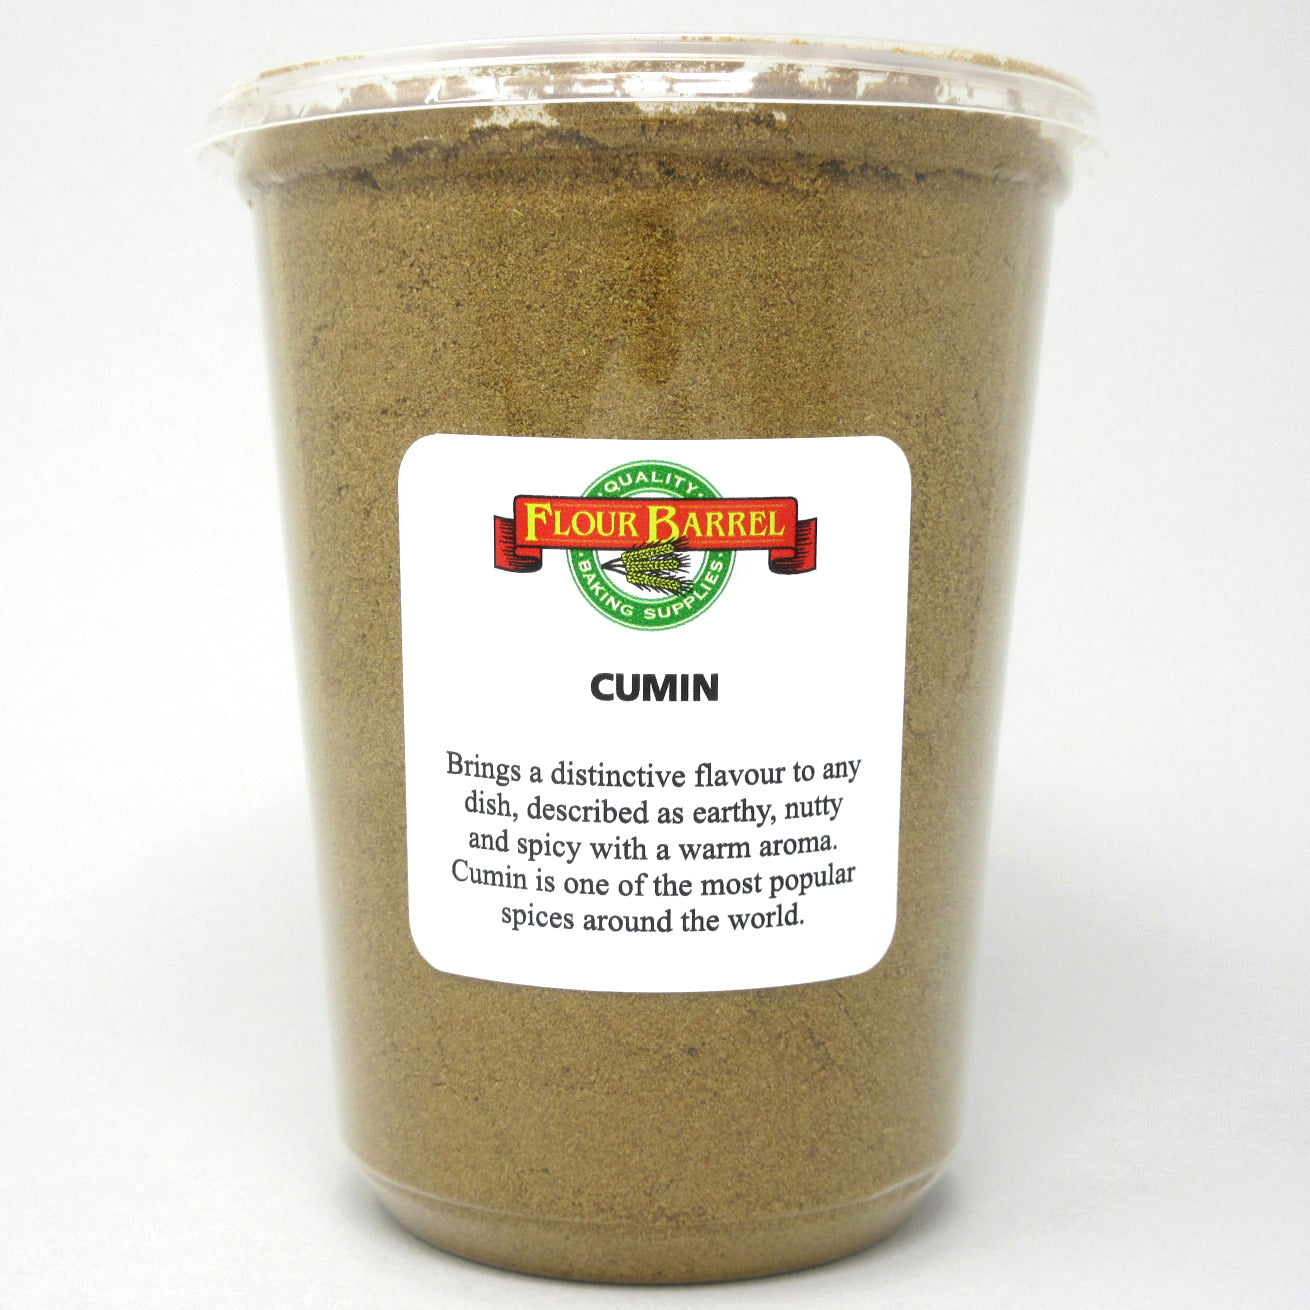 Flour Barrel product image - Cumin